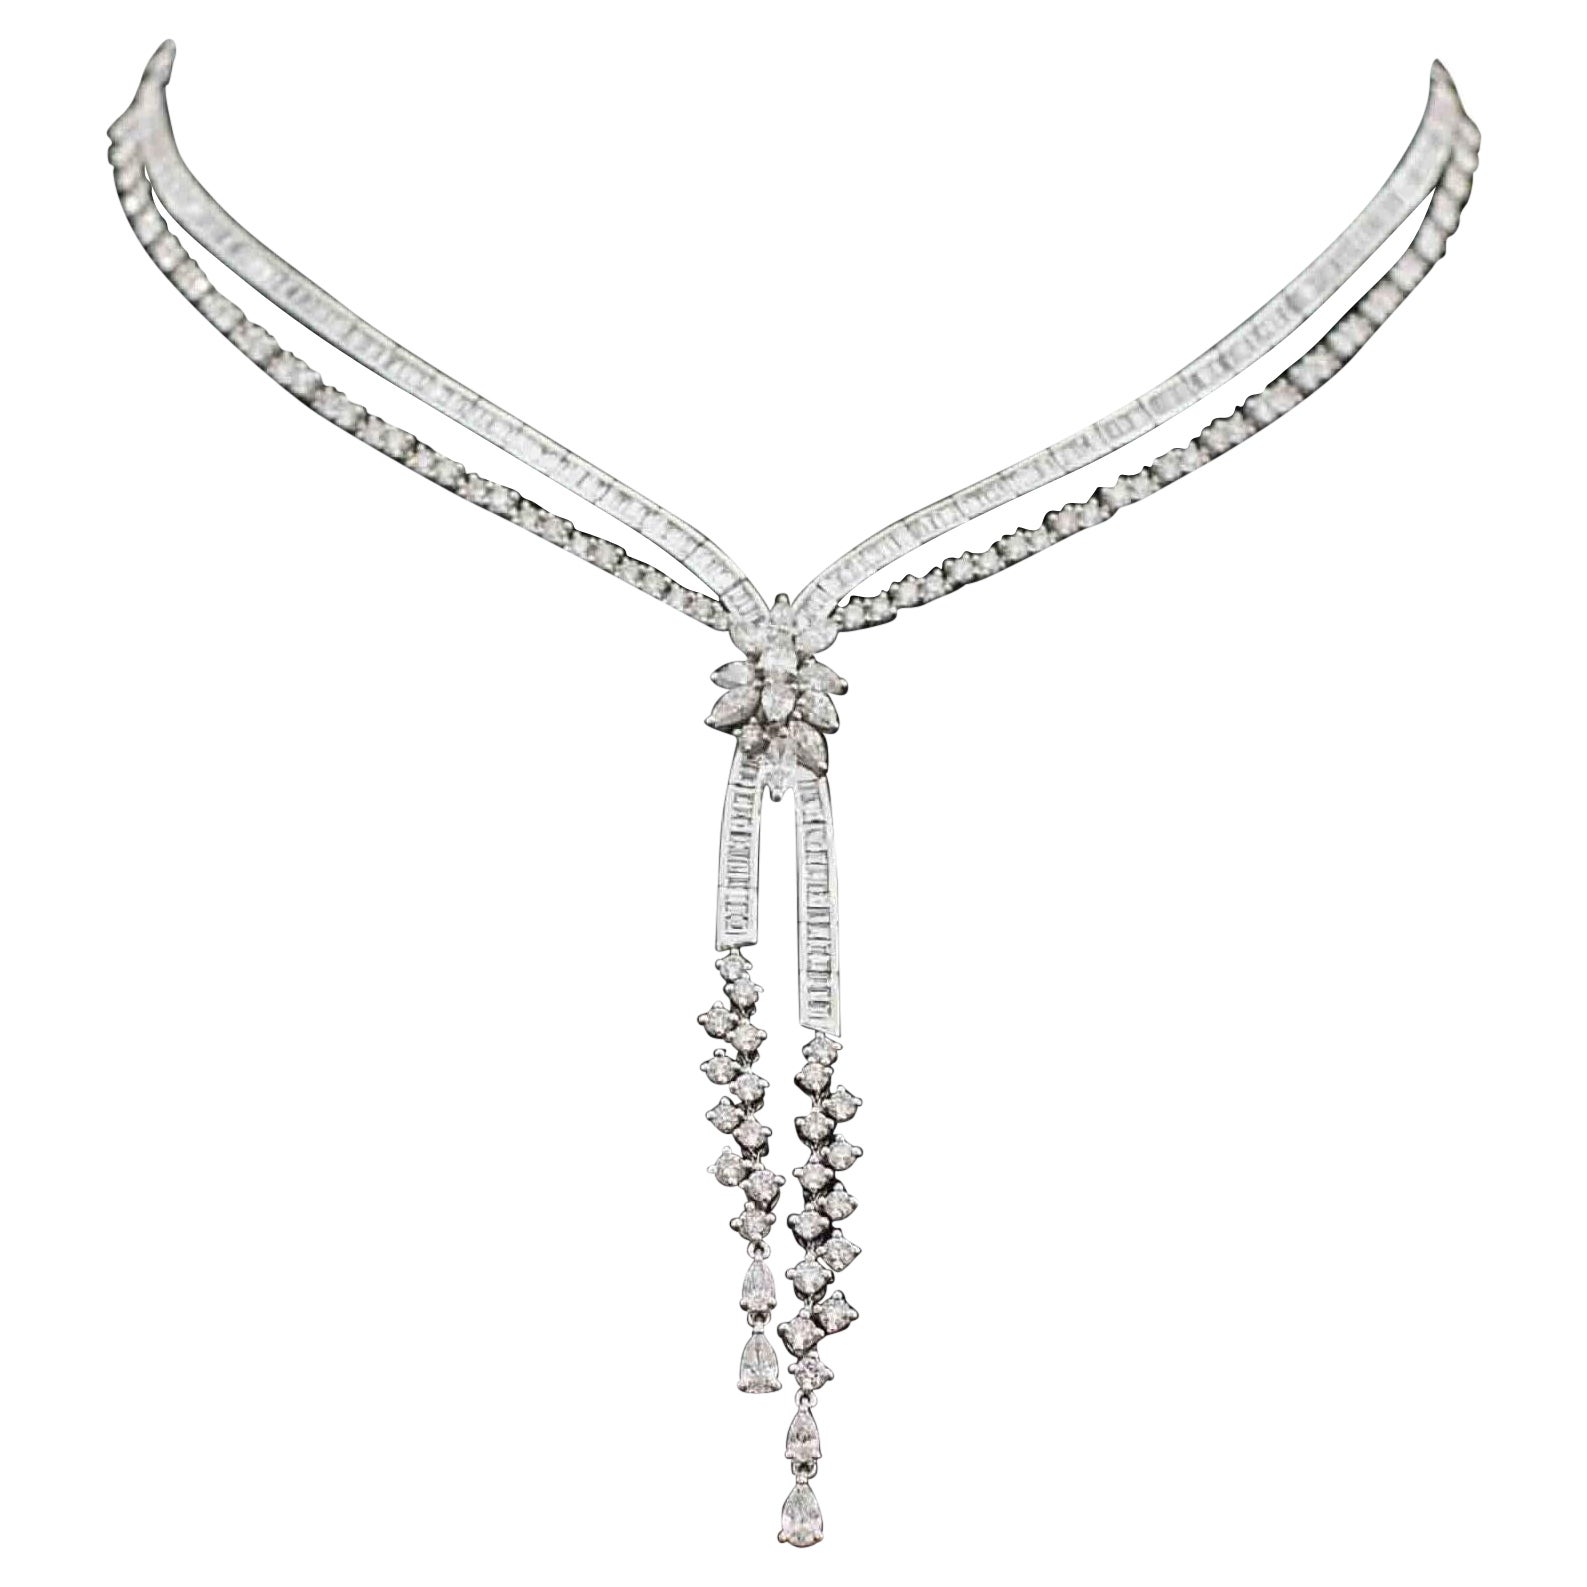 Glamourous 18 Karat White Gold and Diamond Necklace